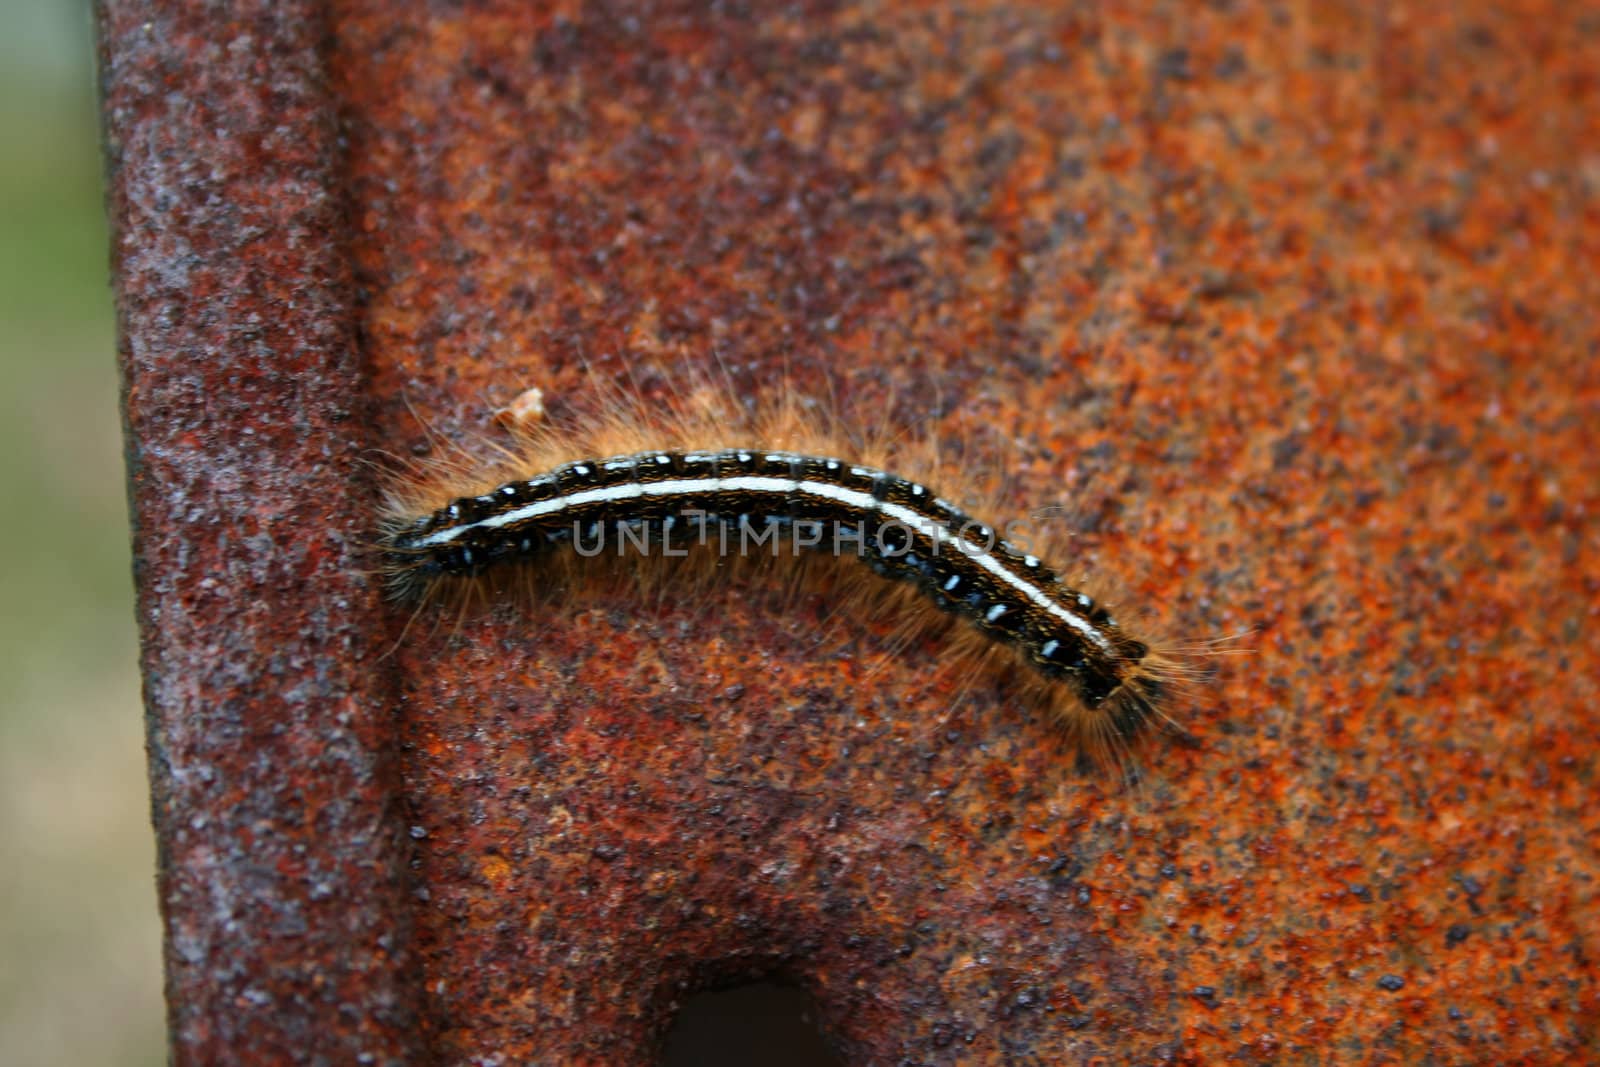 Gypsy moth caterpillar by njnightsky